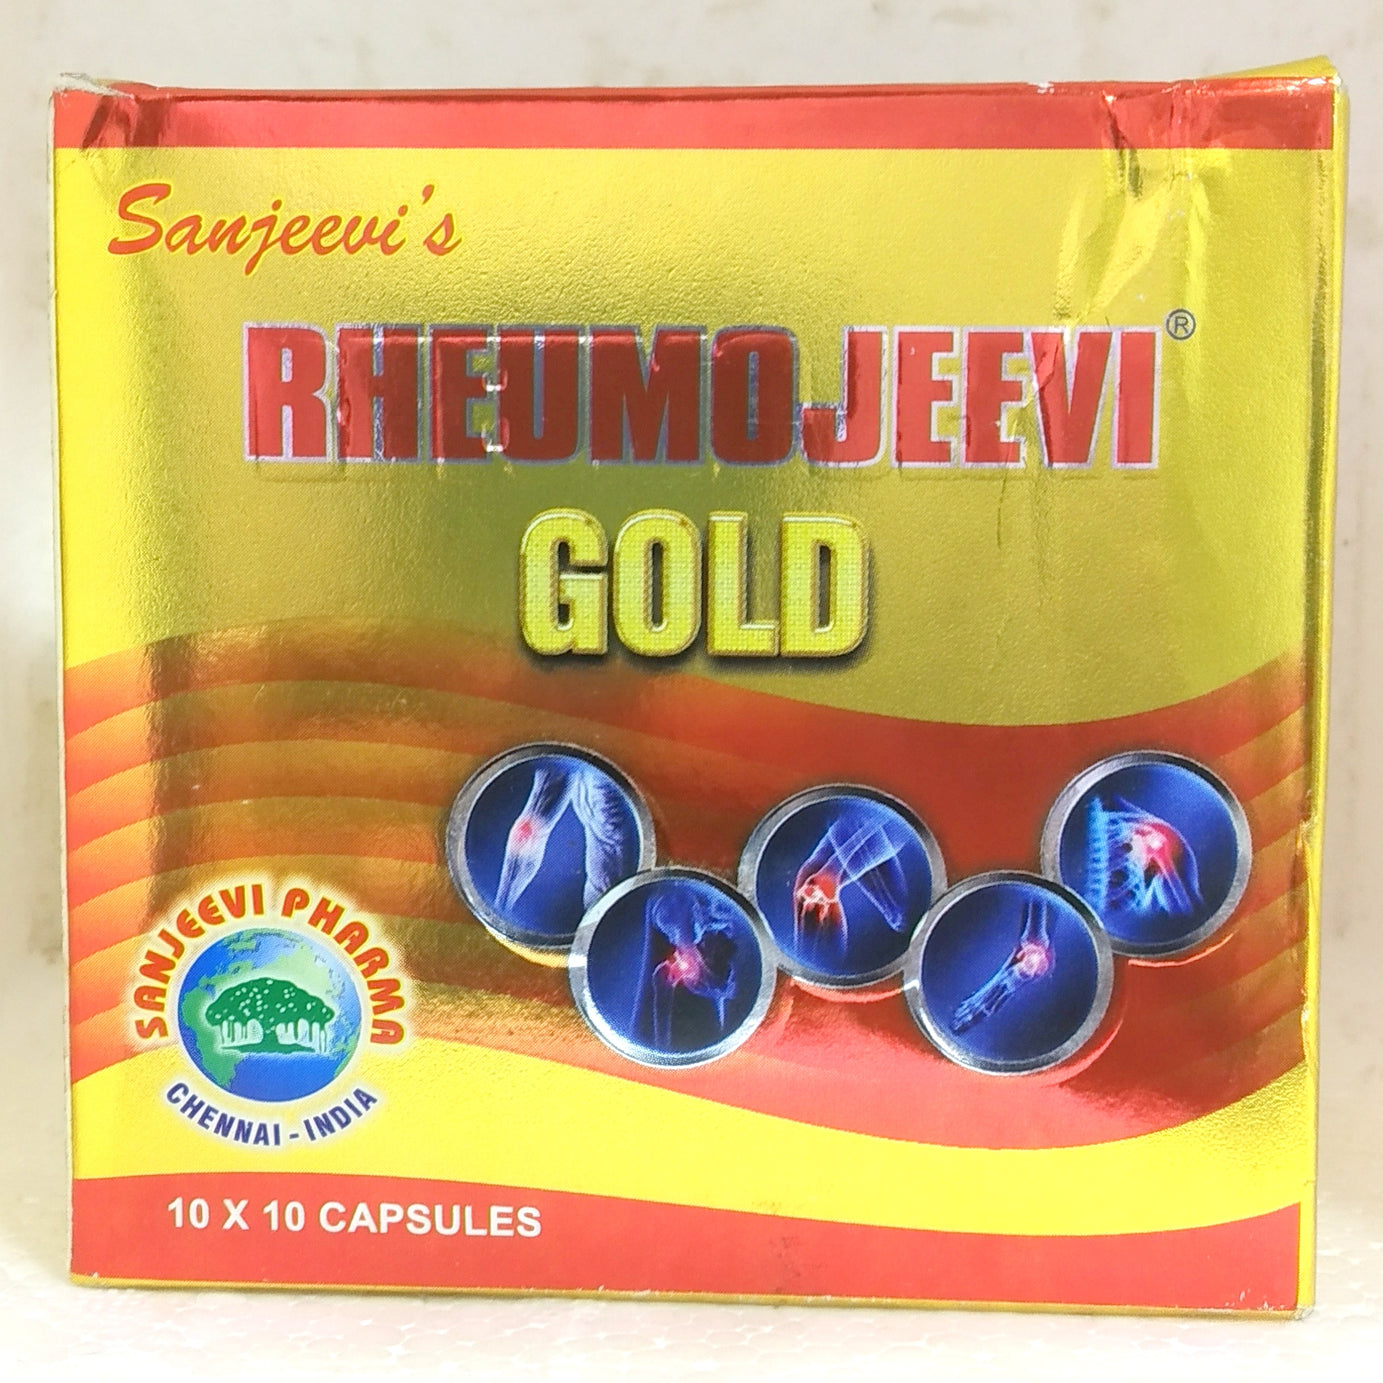 Shop Sanjeevi Rheumojeevi Gold 10Capsules at price 120.00 from Sanjeevi Online - Ayush Care